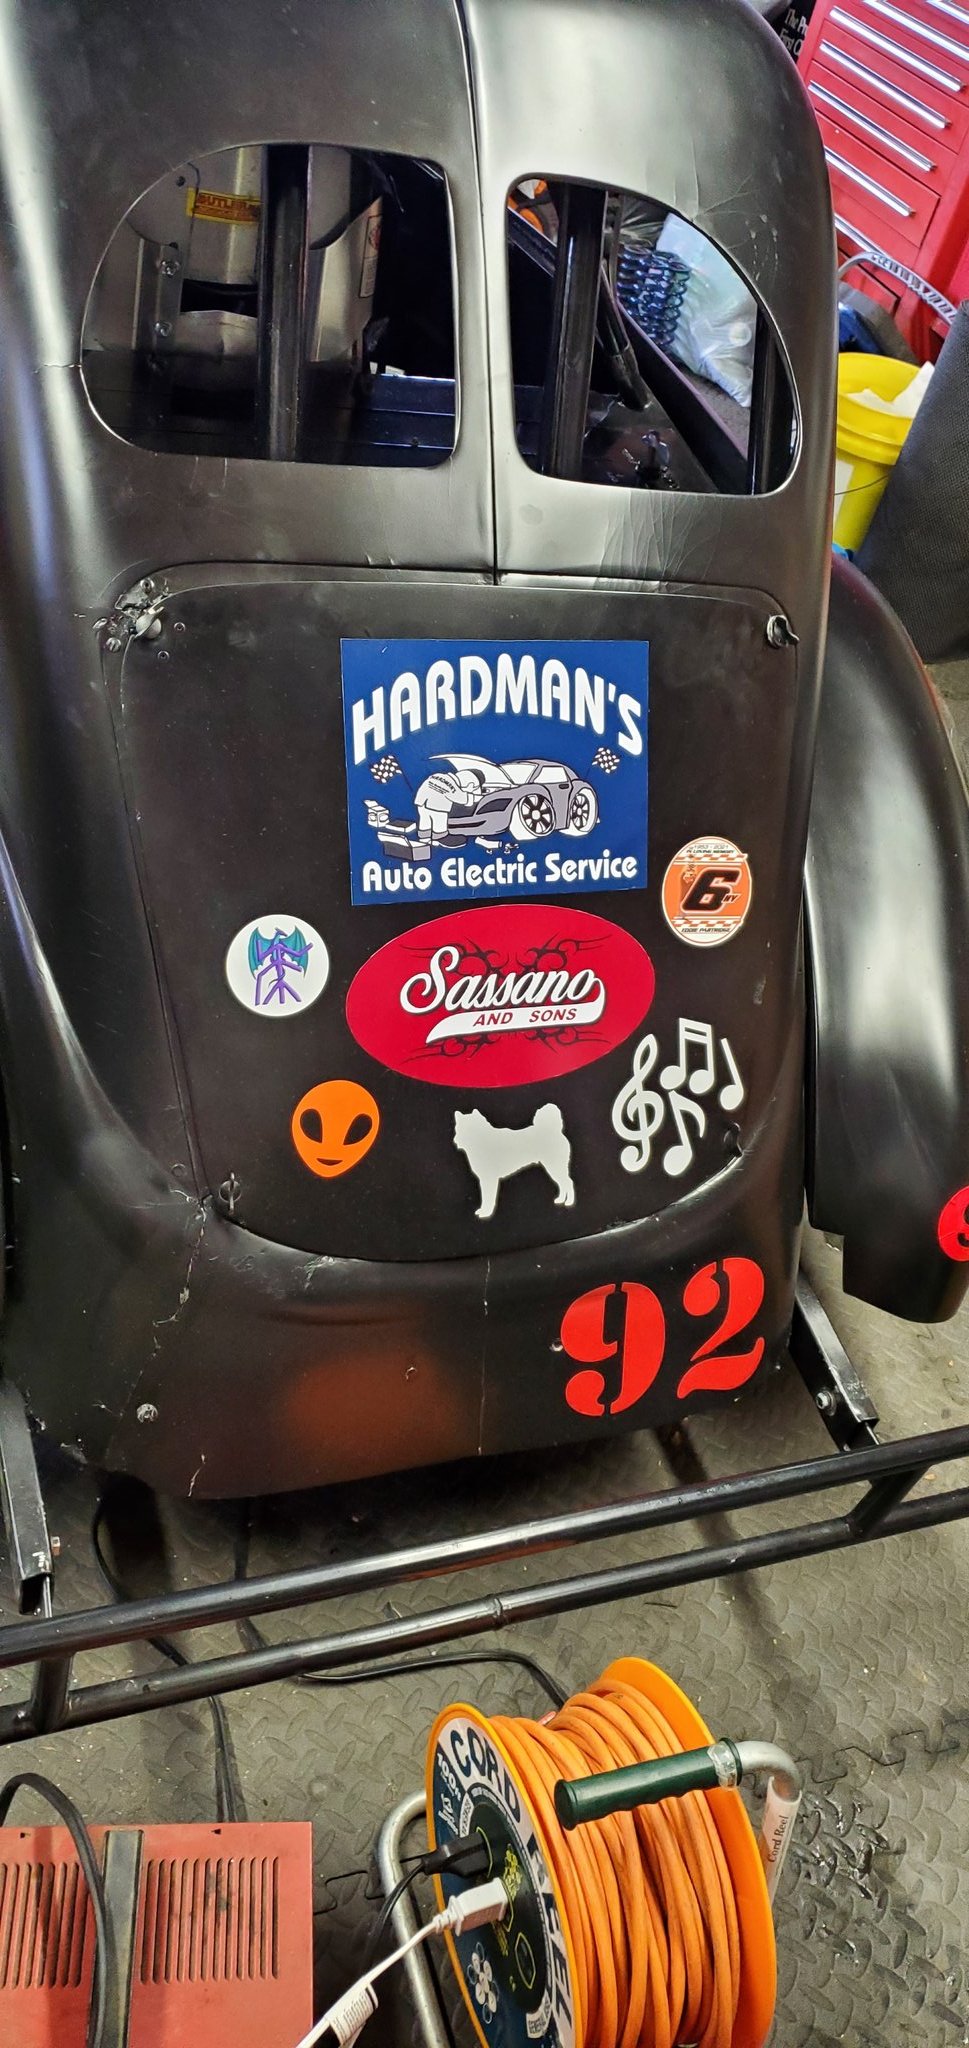 Hardman's Auto Electric Service